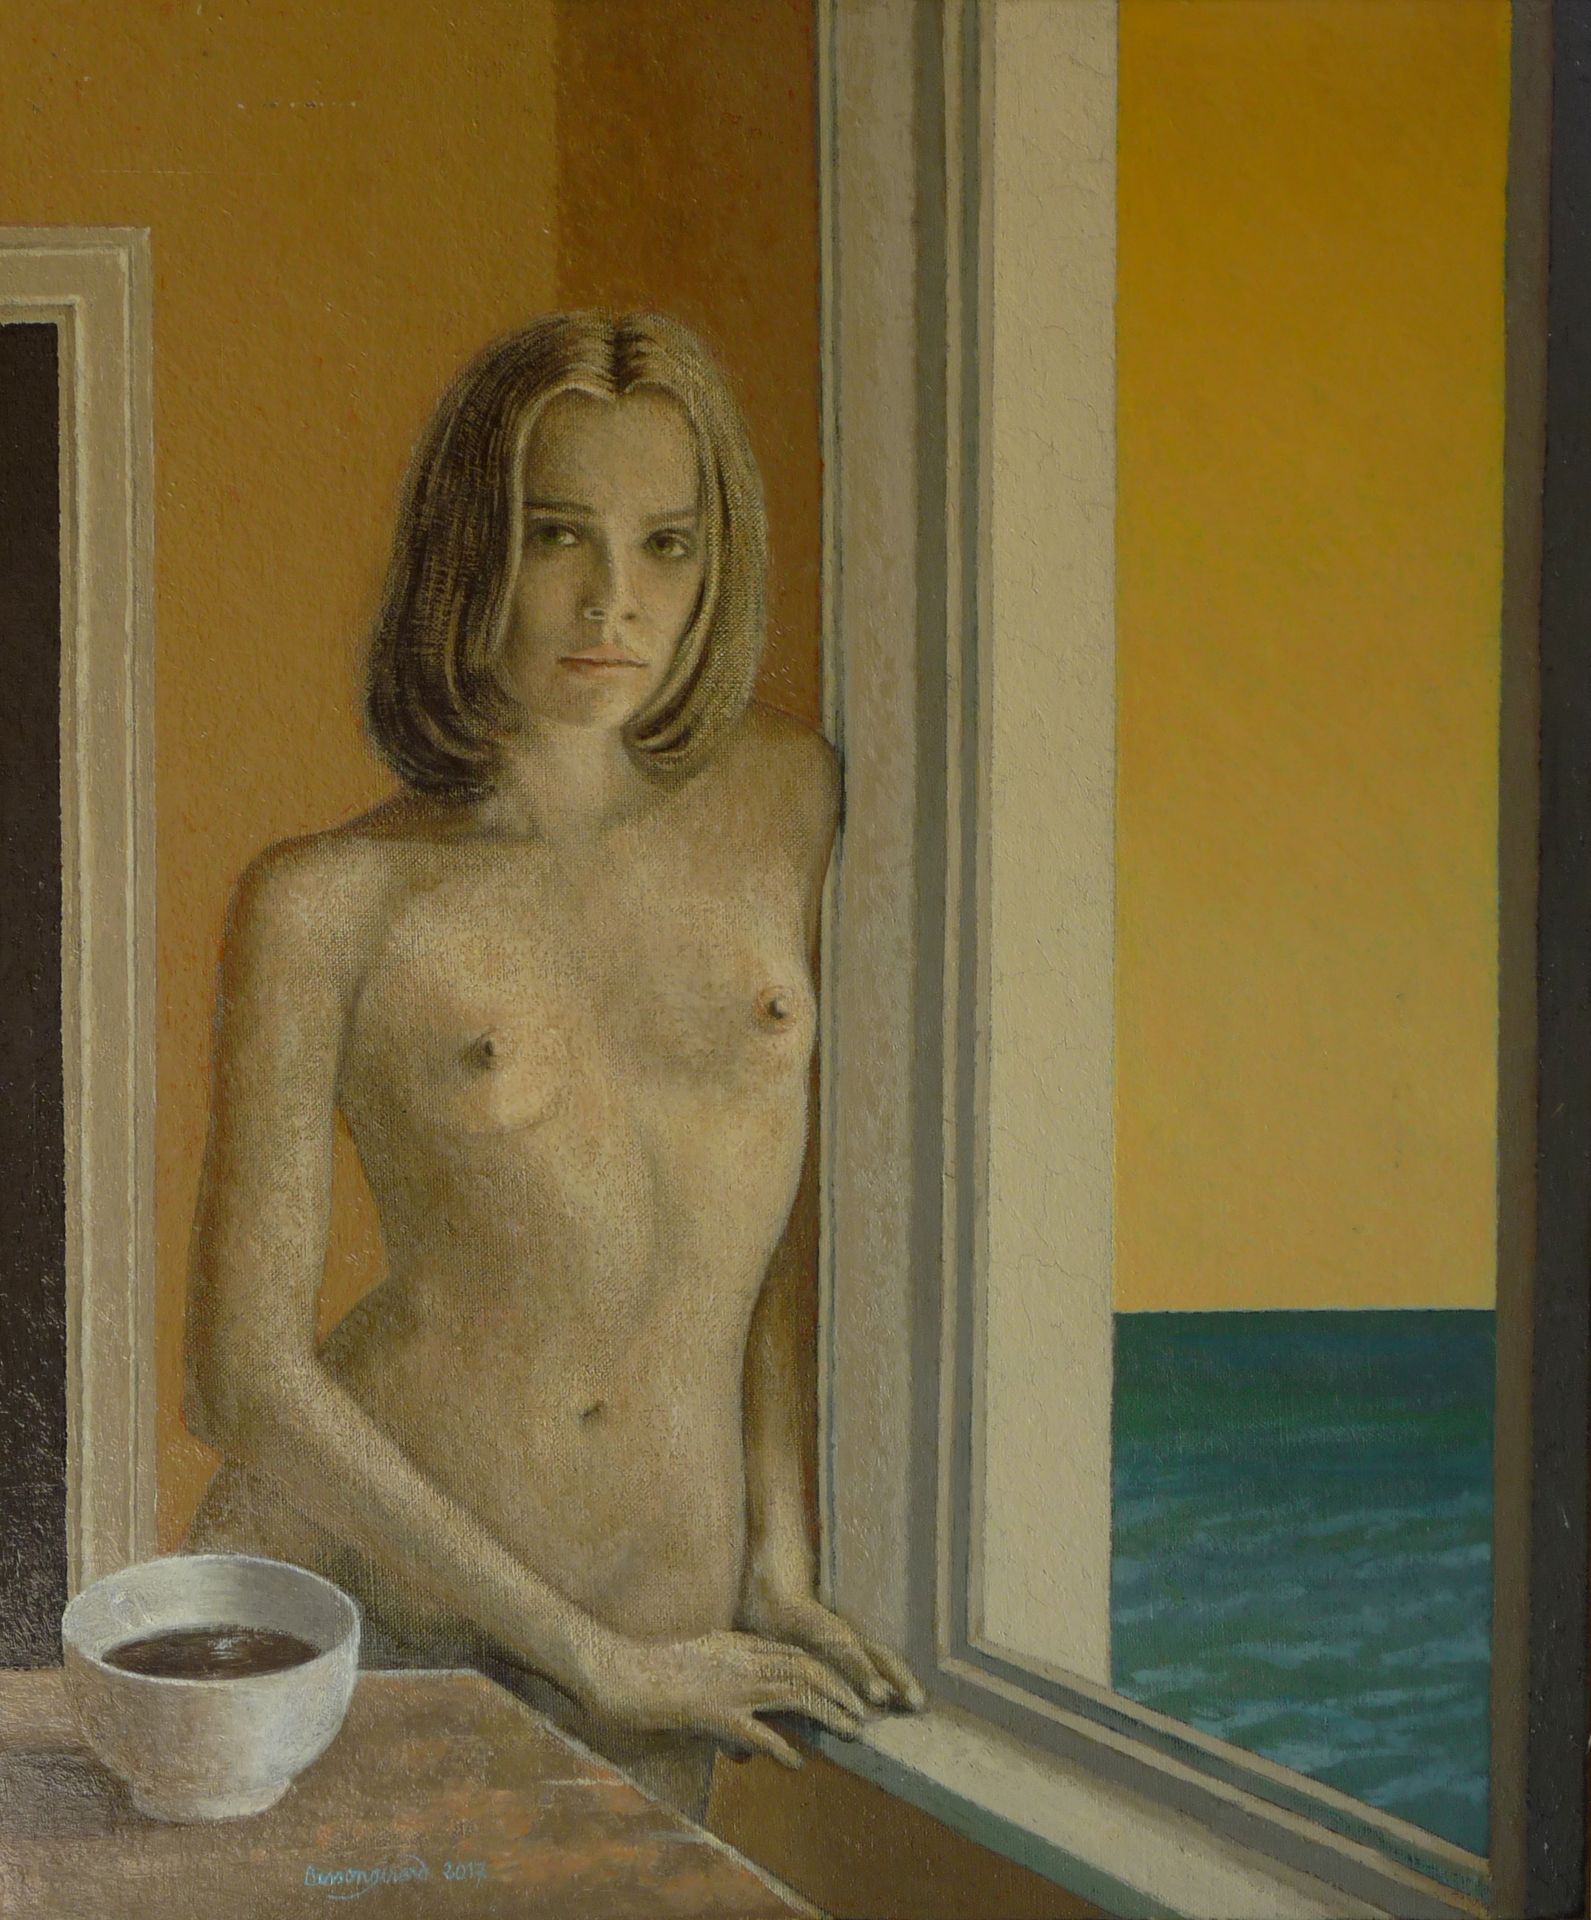 Null 让-克劳德-贝松-吉拉尔 (1938-2021)

无题（有黄色天空的裸体），2017年

布面油画，左下方有签名和日期

65 x 54 cm